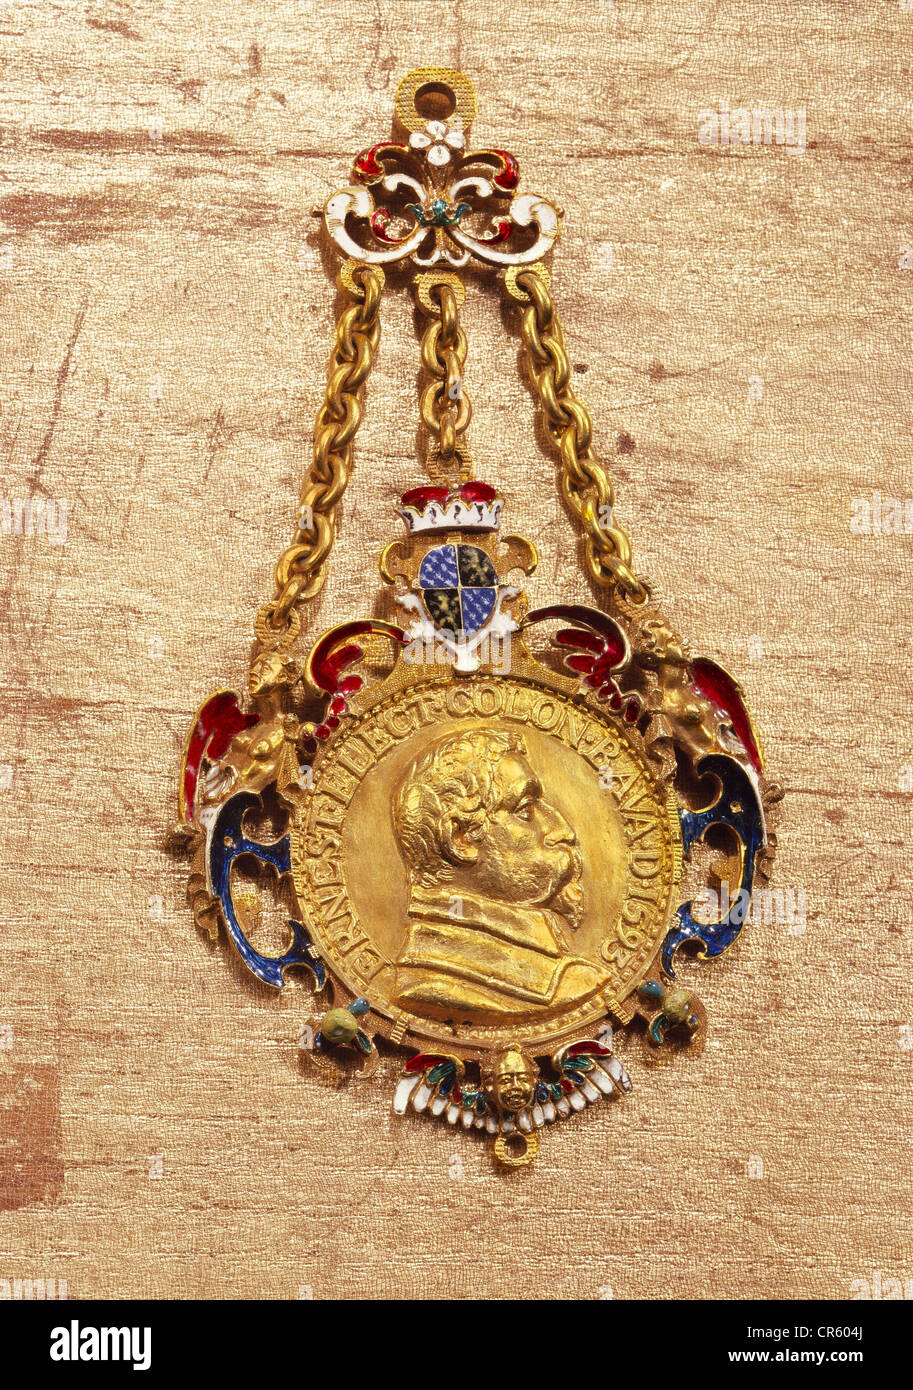 Ernest of Bavaria, 17.12.1554 - 17.2.1612, Archbishopric of Cologne 1583 - 1612, portrait, side view, medal, 'Gnadenpfennig', by Hans Reimer, gold, cast, enamel, 9.1 cm x 5.0 cm, Munich 1593, State Coin Collection, Munich, Stock Photo